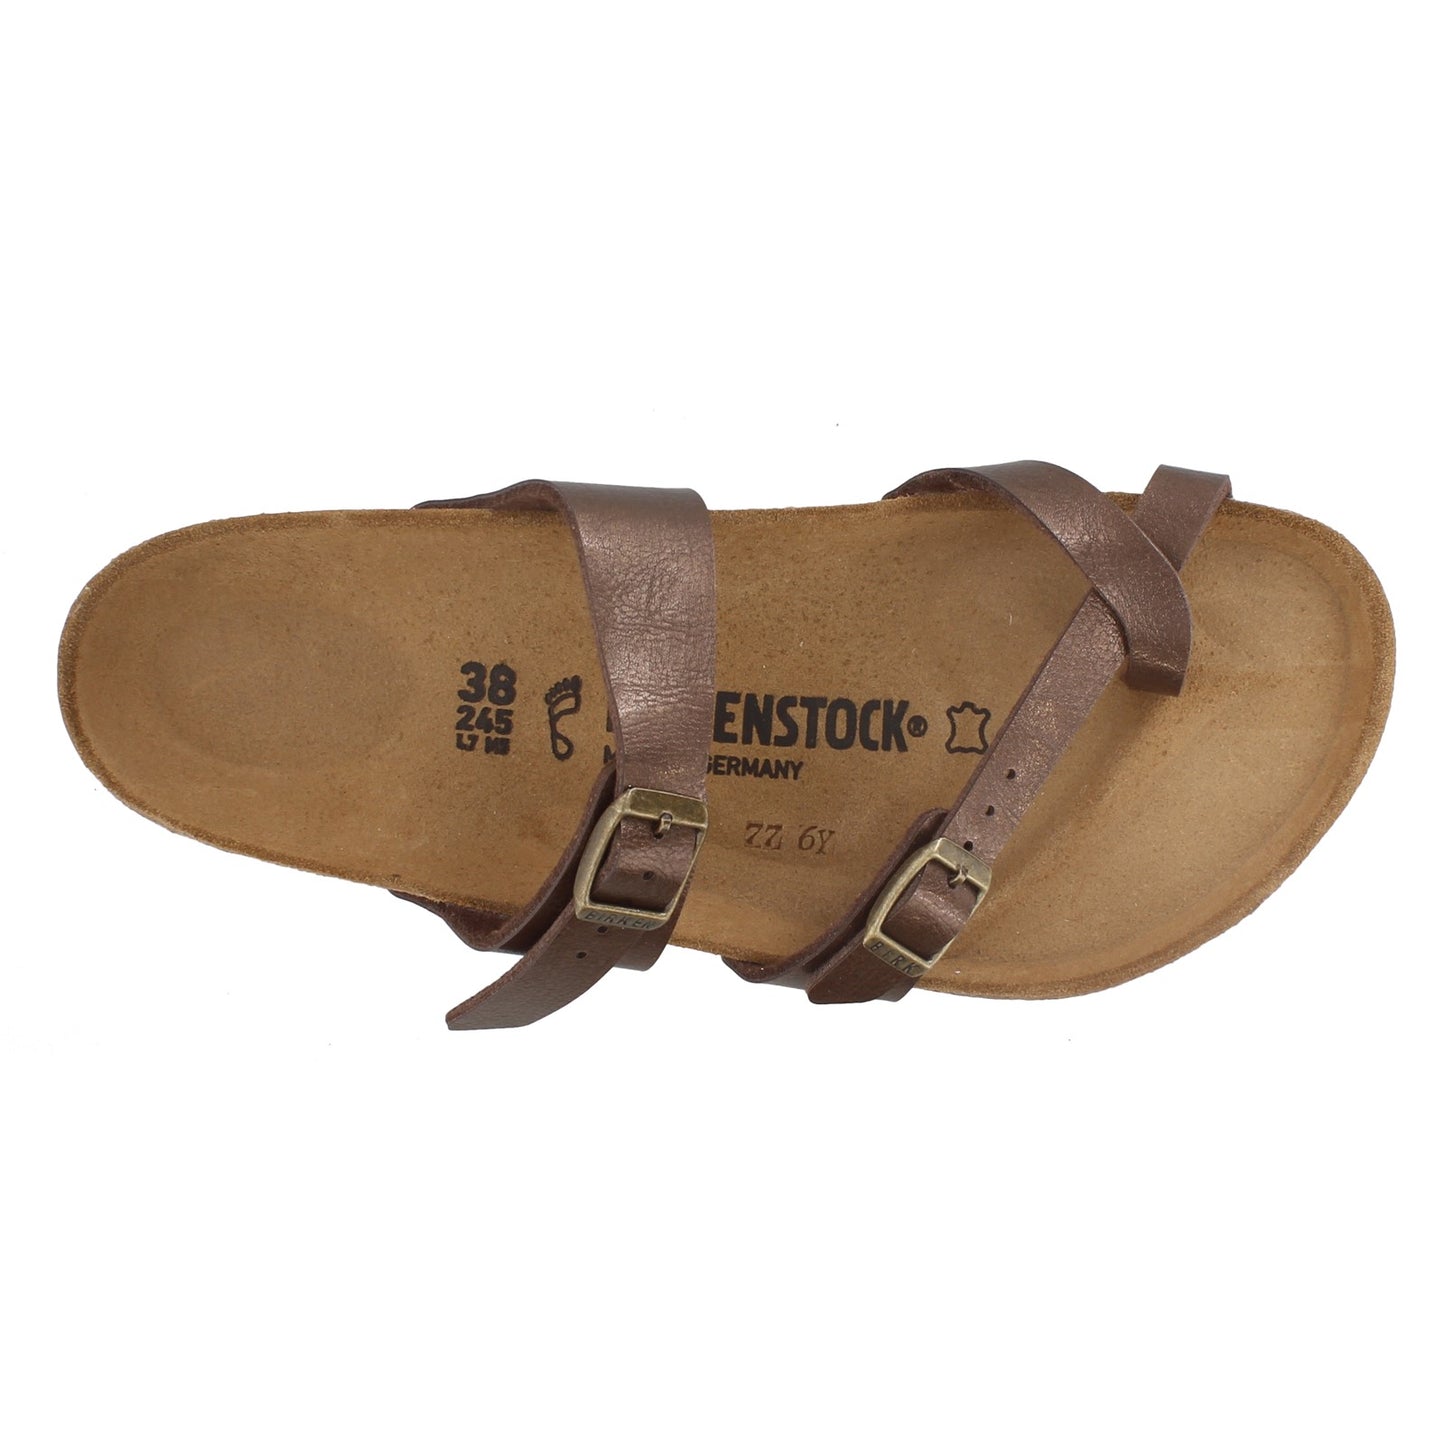 Peltz Shoes  Women's Birkenstock Mayari Thong Sandal - Regular Width TOFFEE 7194 1 R